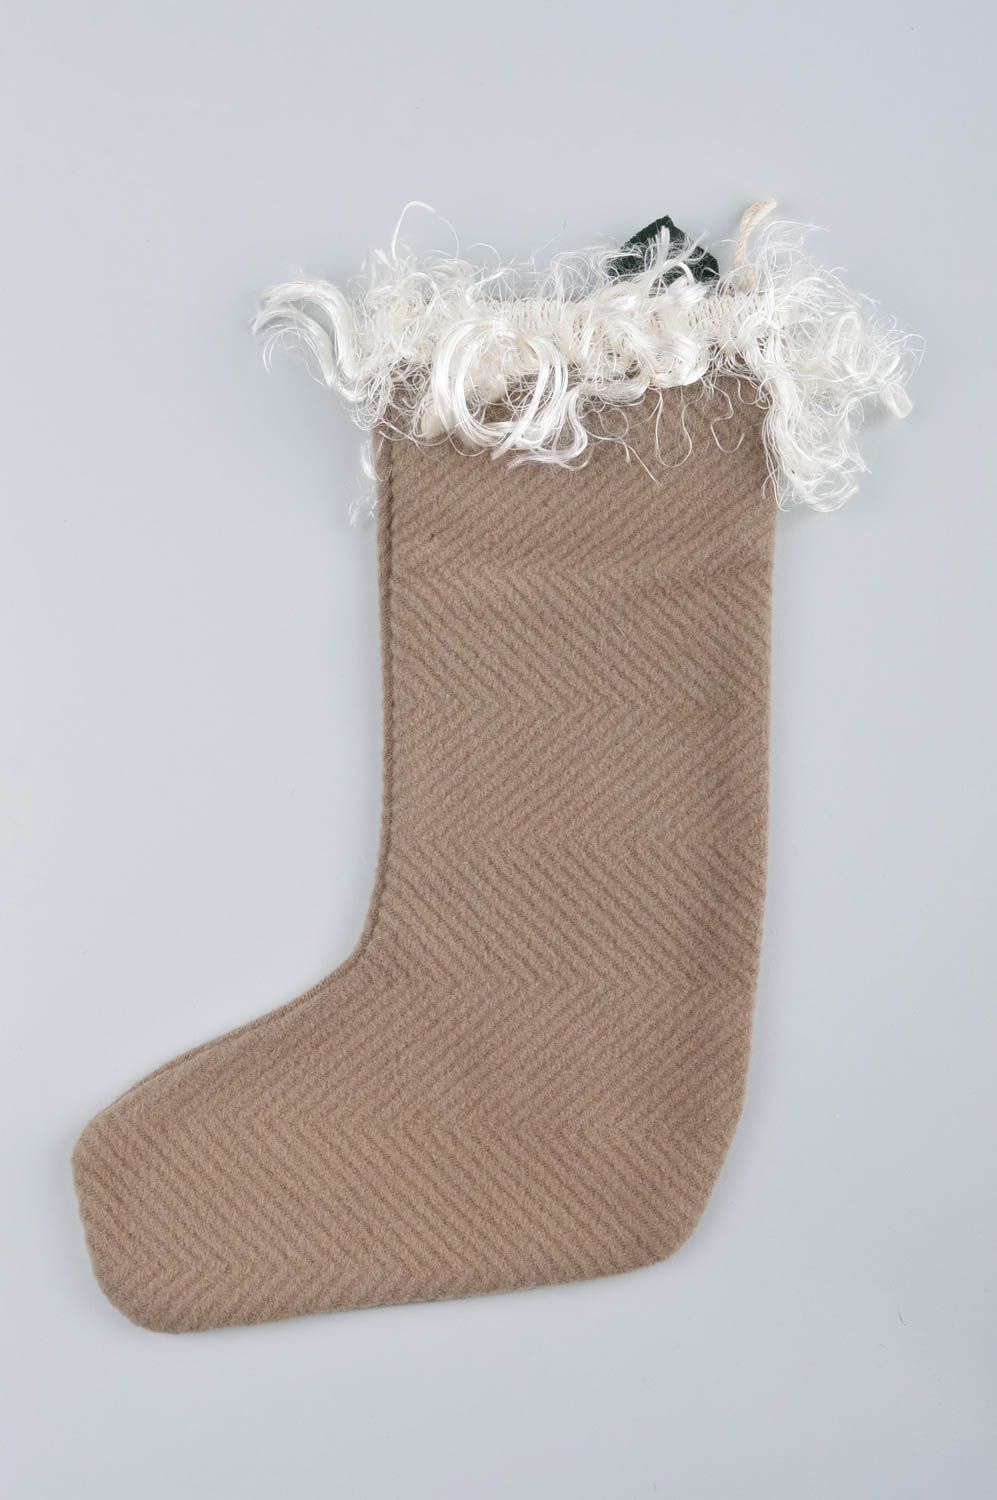 Homemade home decor Christmas stockings Xmas stockings souvenir ideas cool gifts photo 4